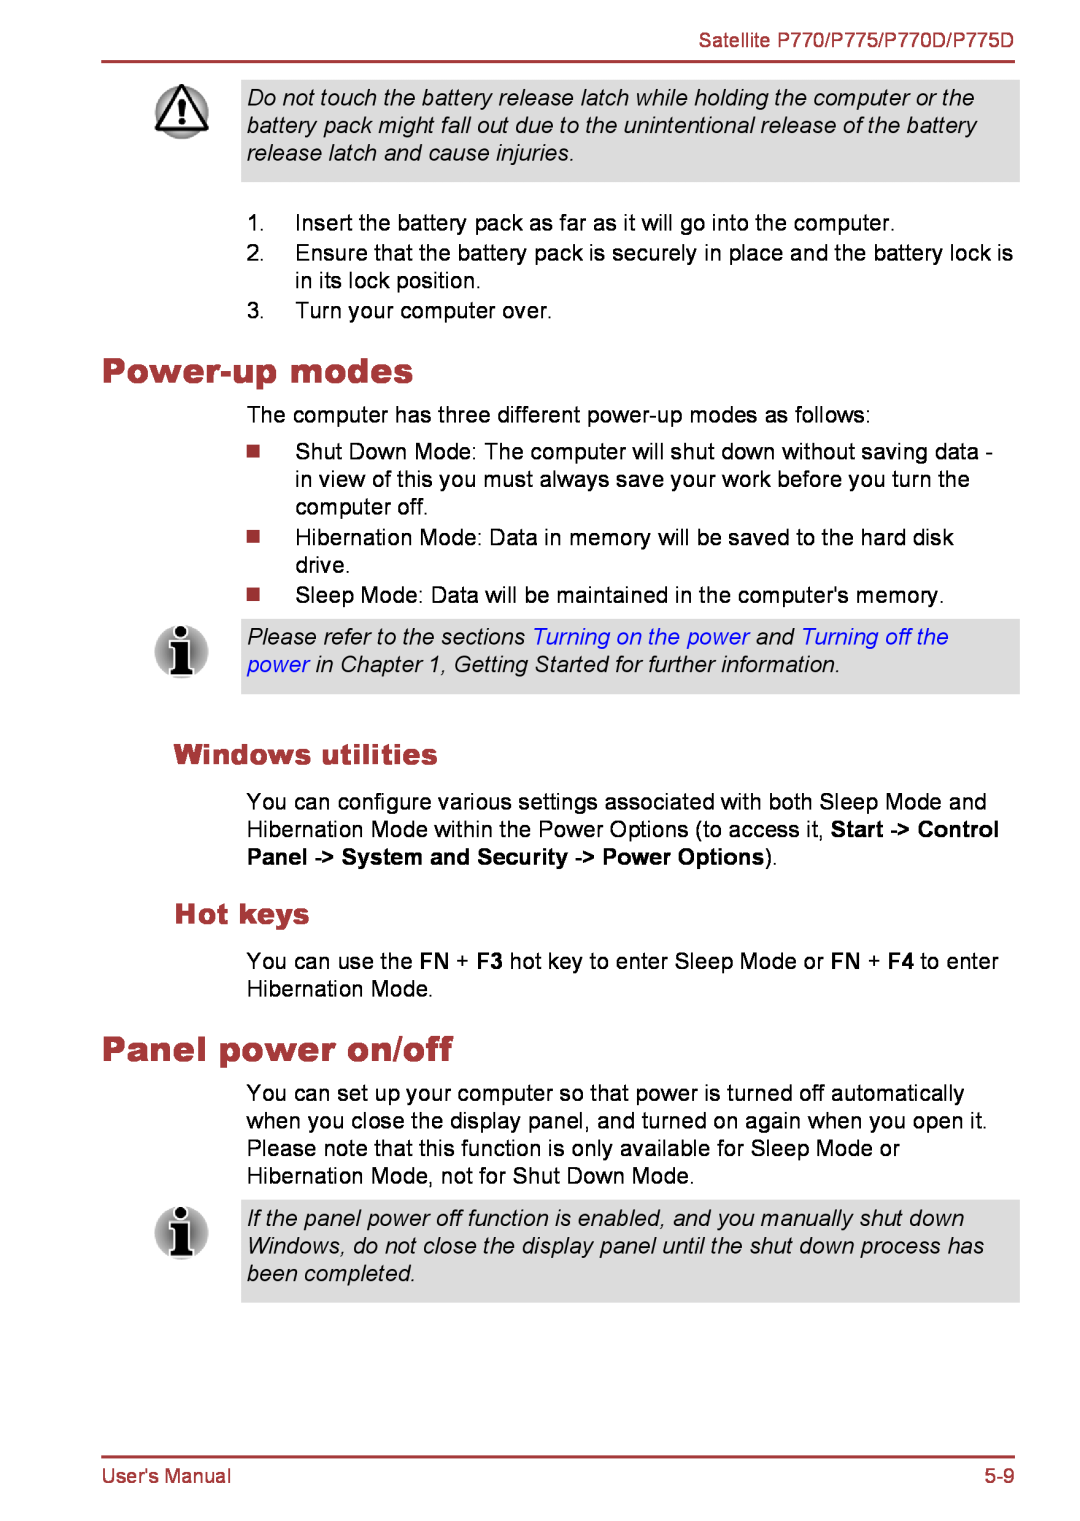 Toshiba P770 user manual Power-up modes, Panel power on/off, Windows utilities, Hot keys 